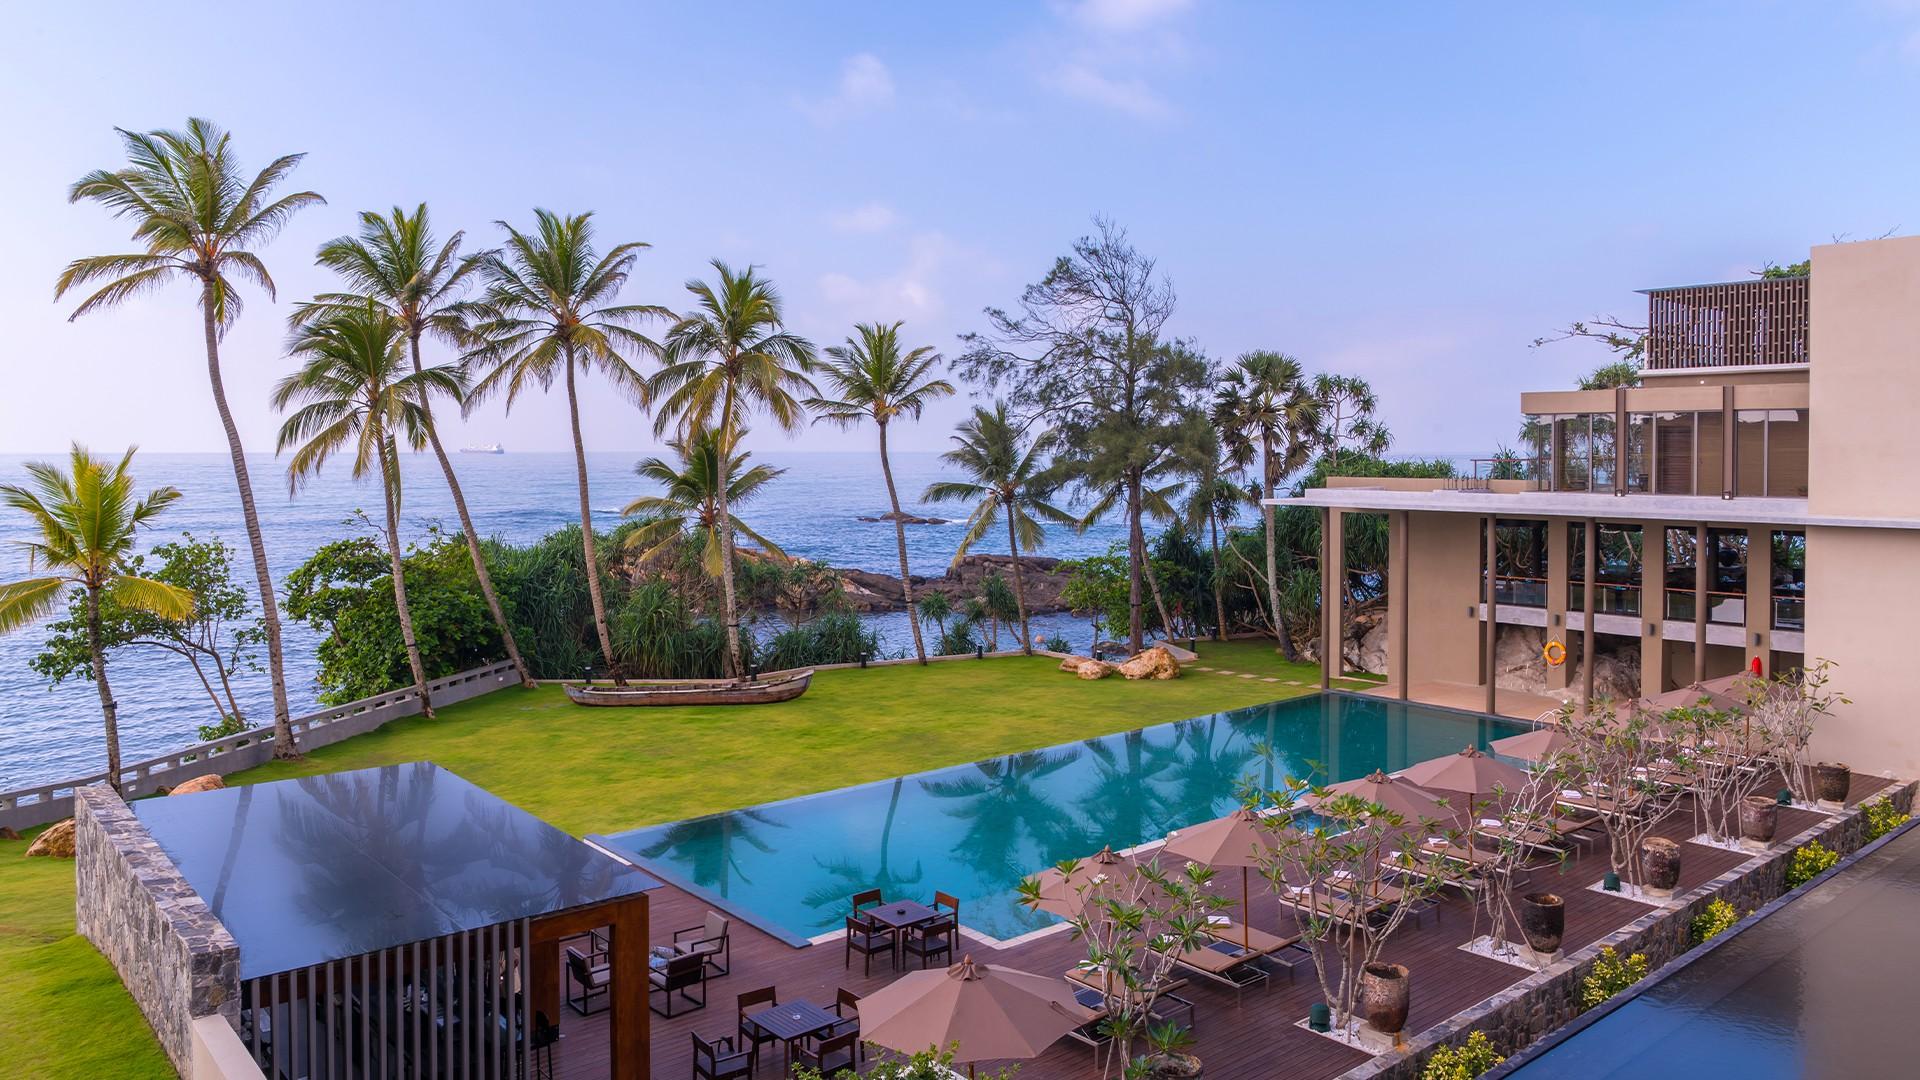 Top 5 Best Value Family Friendly Hotels in Sri Lanka